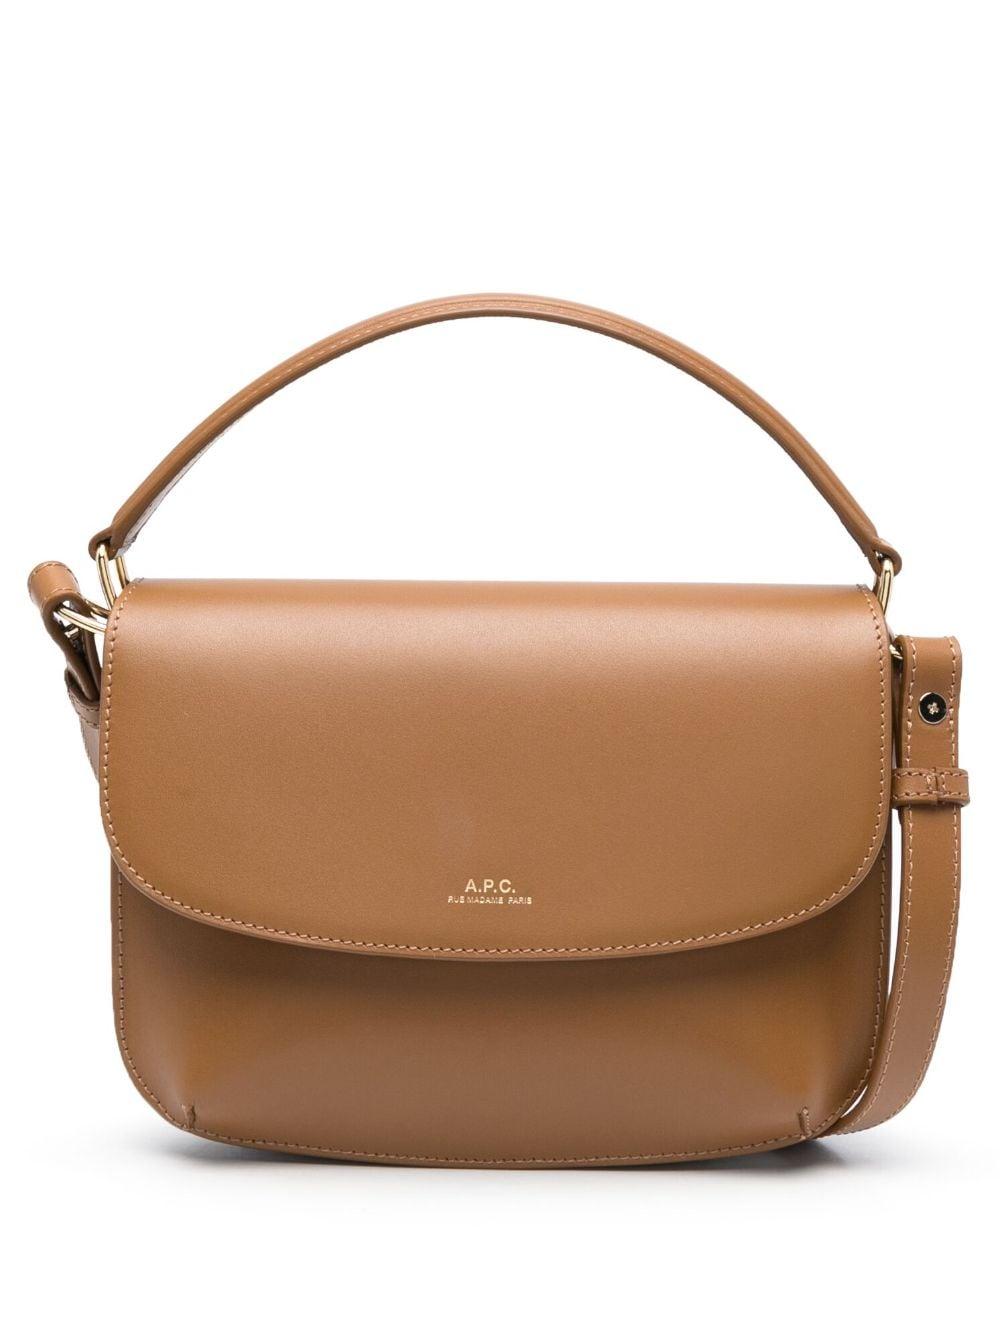 A.P.C. Sarah Leather Shoulder Bag in Brown | Lyst